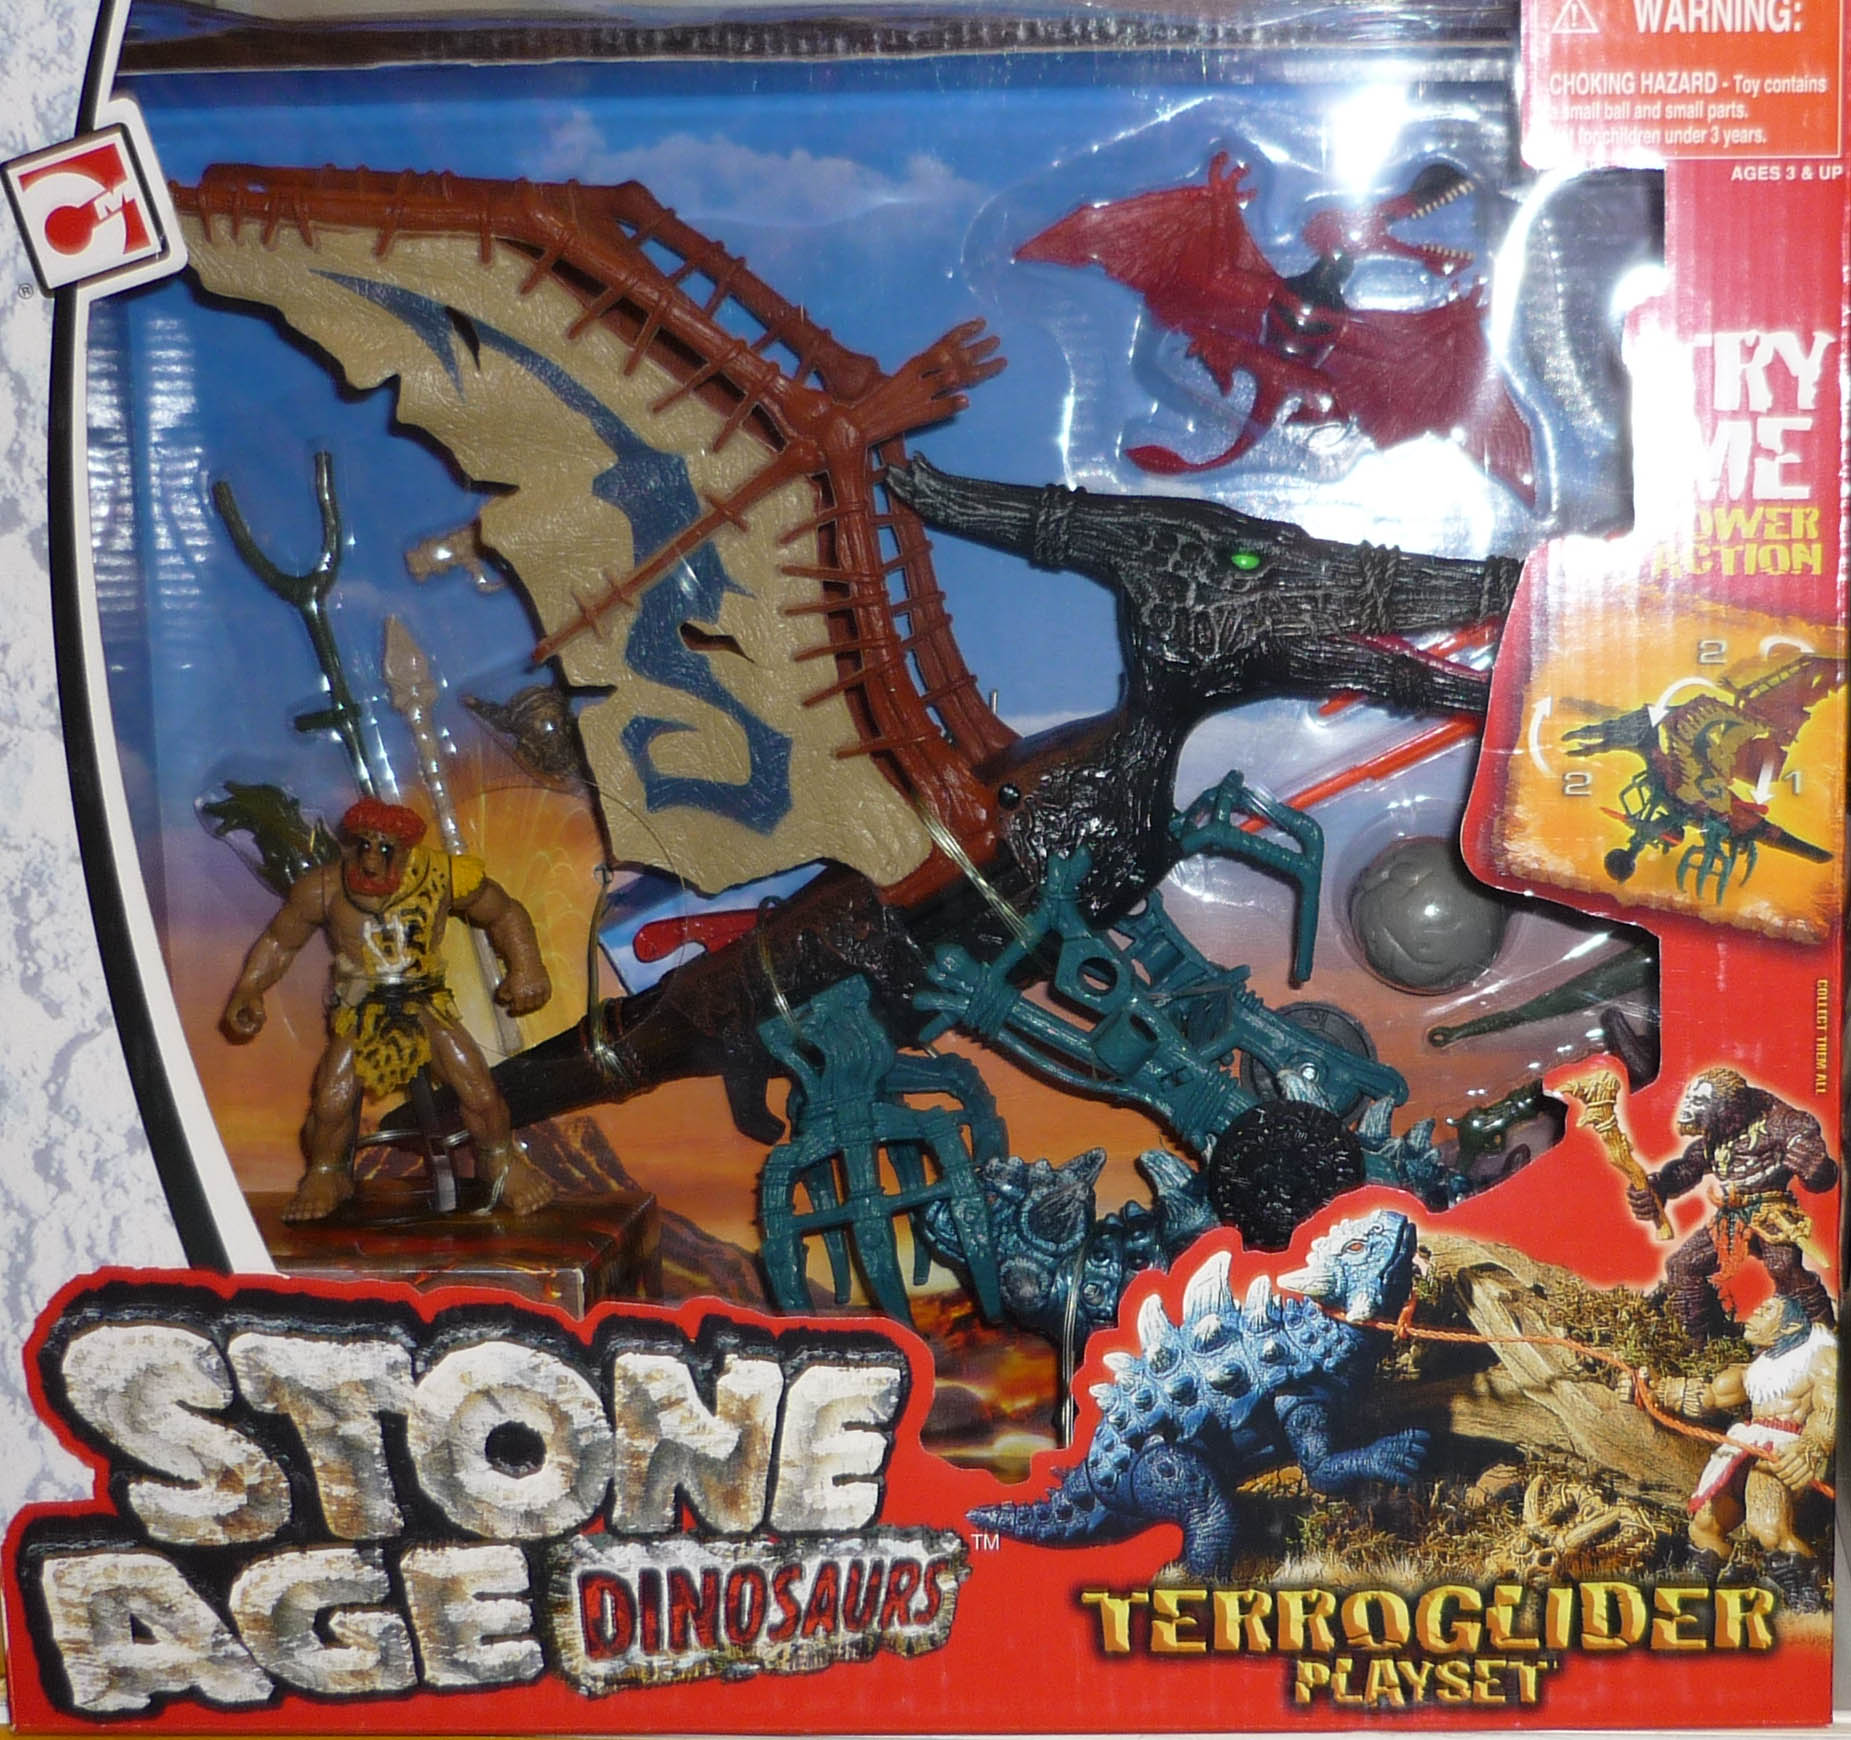 stone age dinosaurs toys